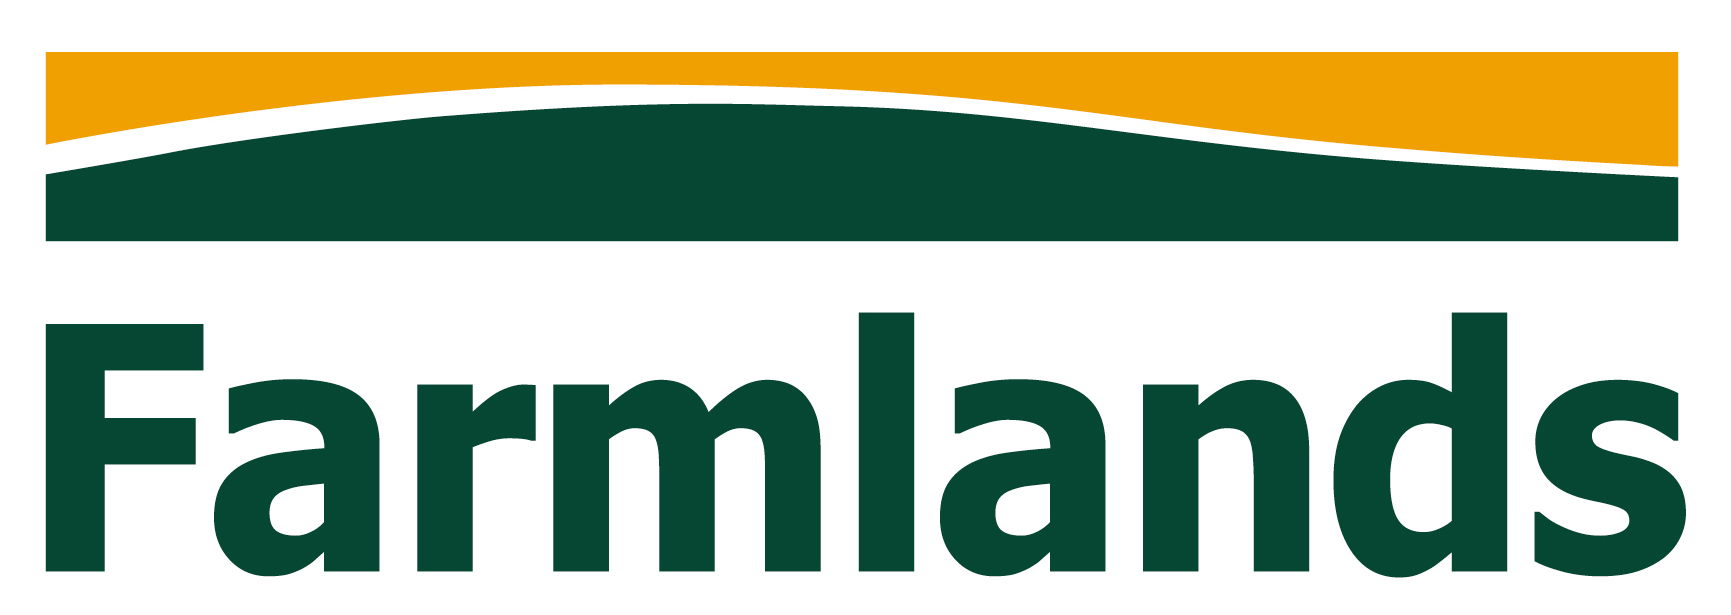 Farmlands logo on white